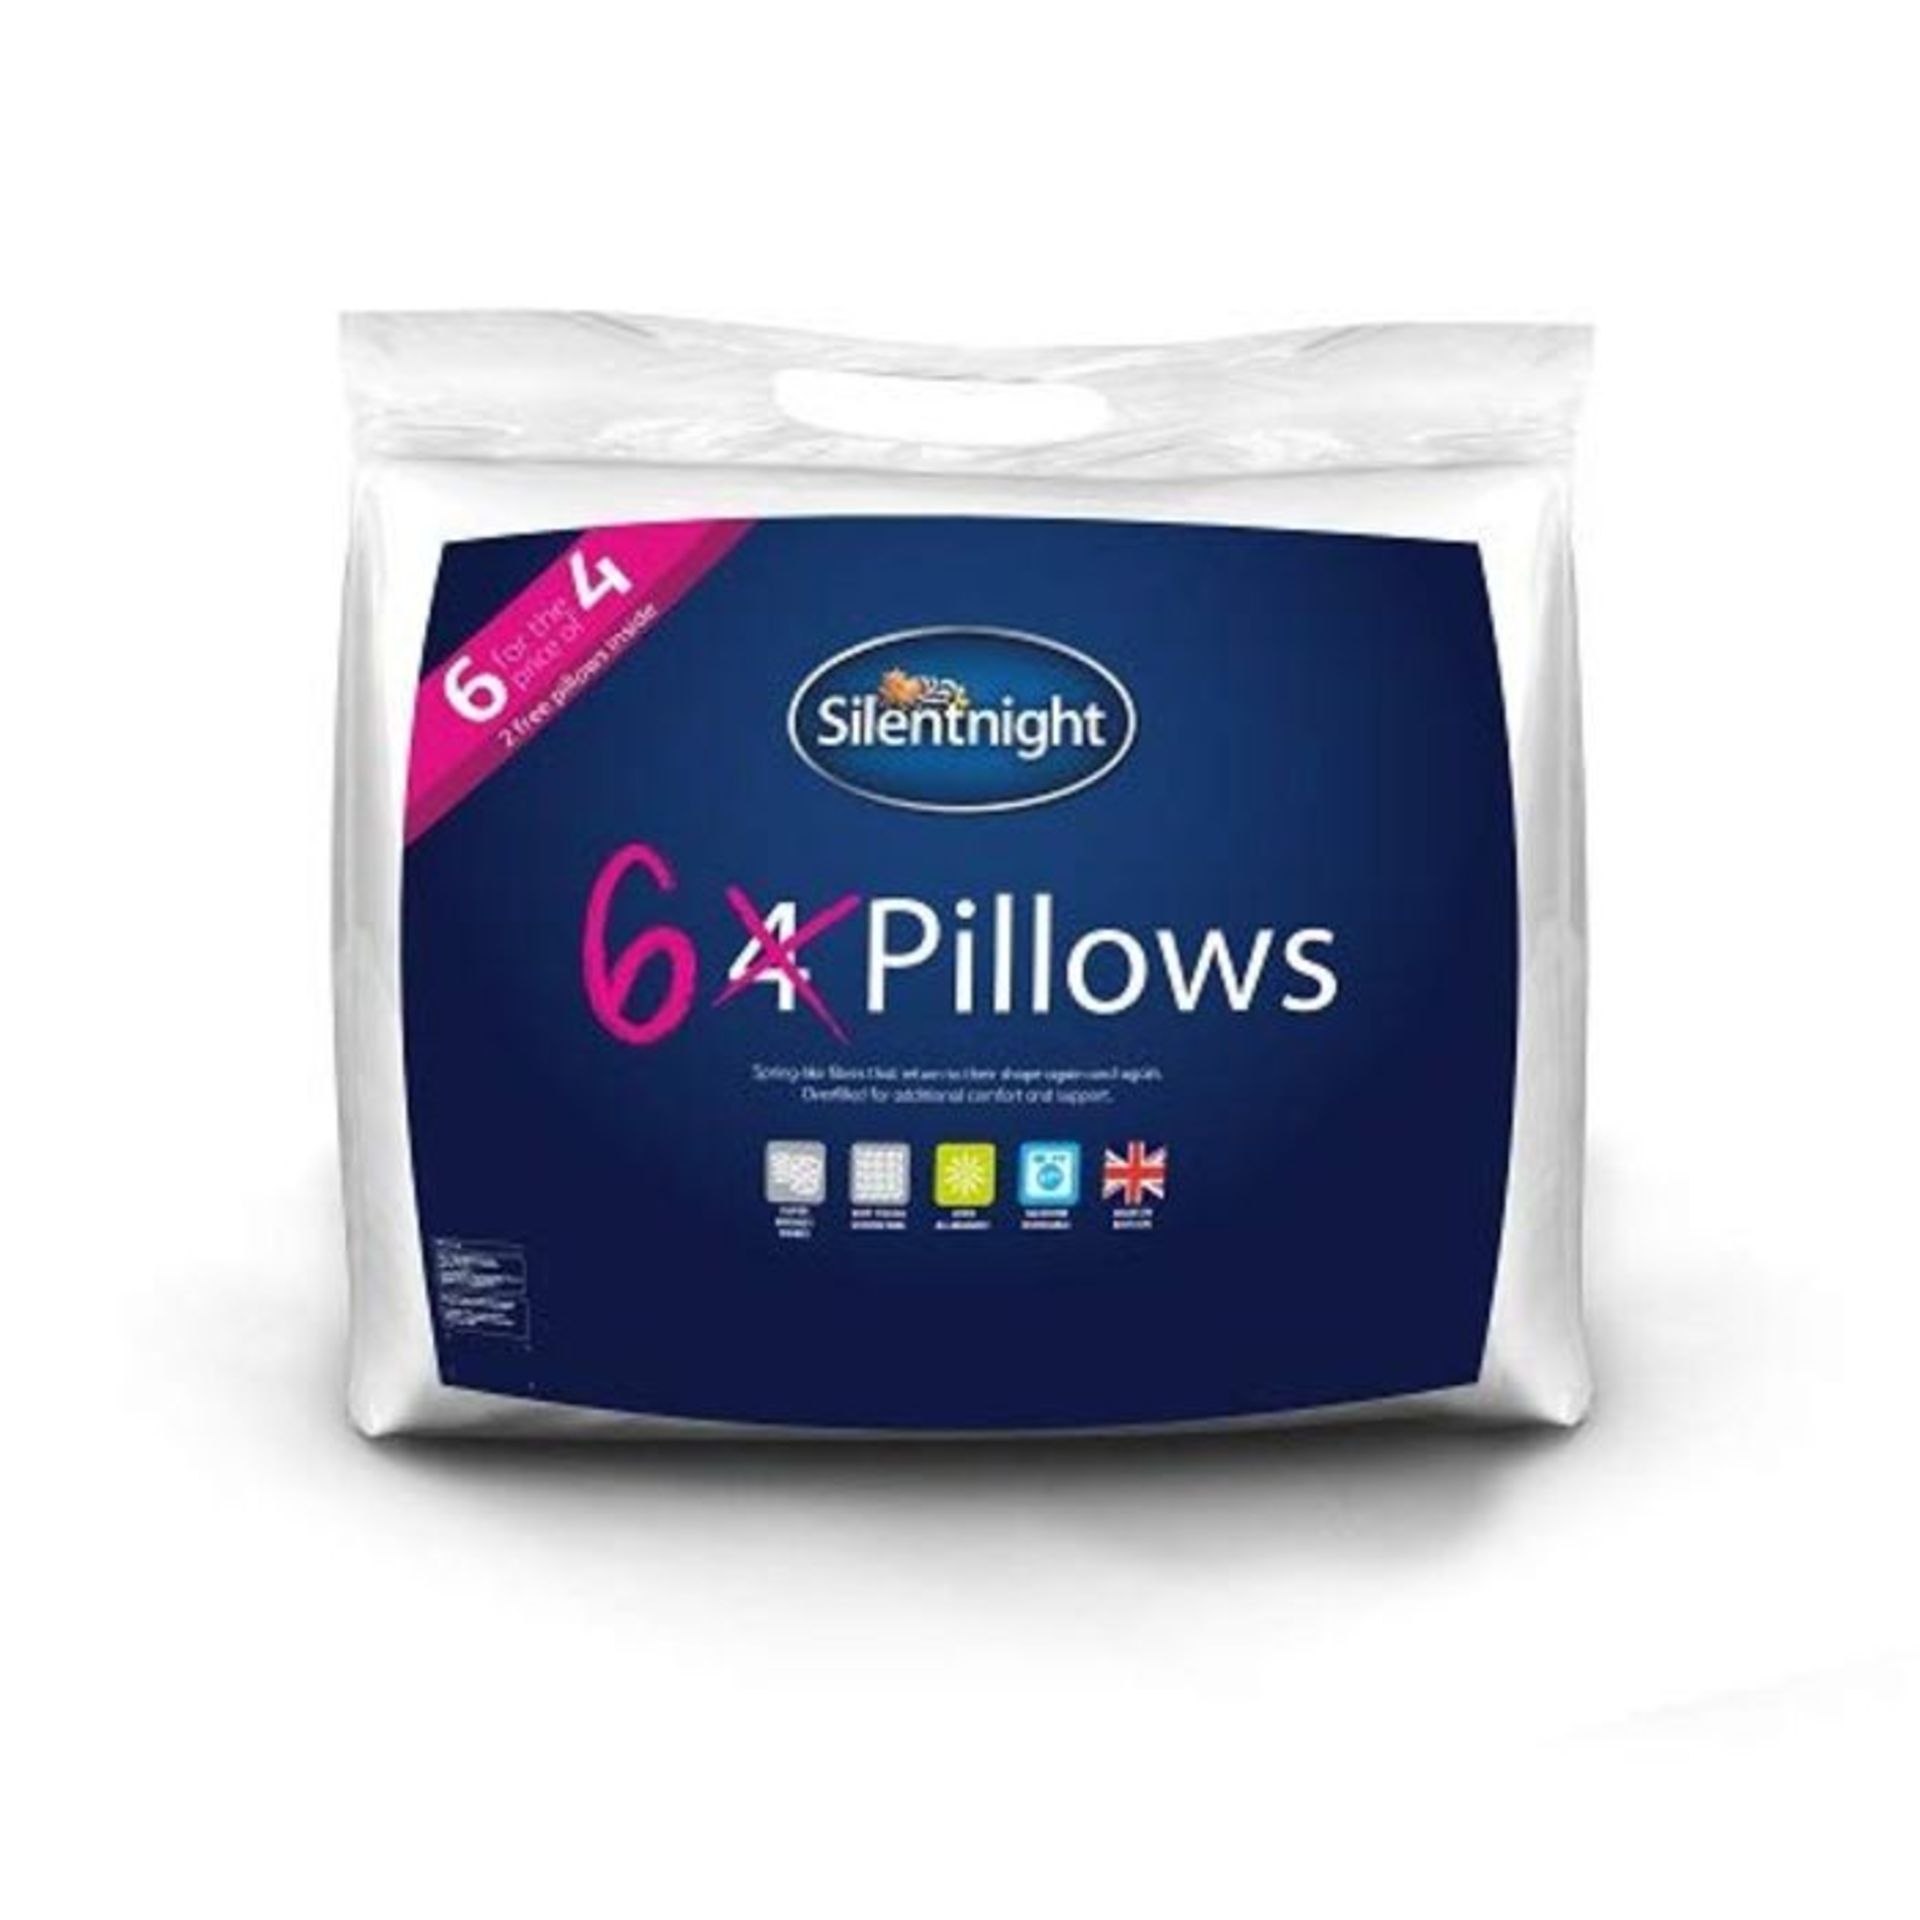 Silentnight Ultrabounce Pillow, White, Pack of 6